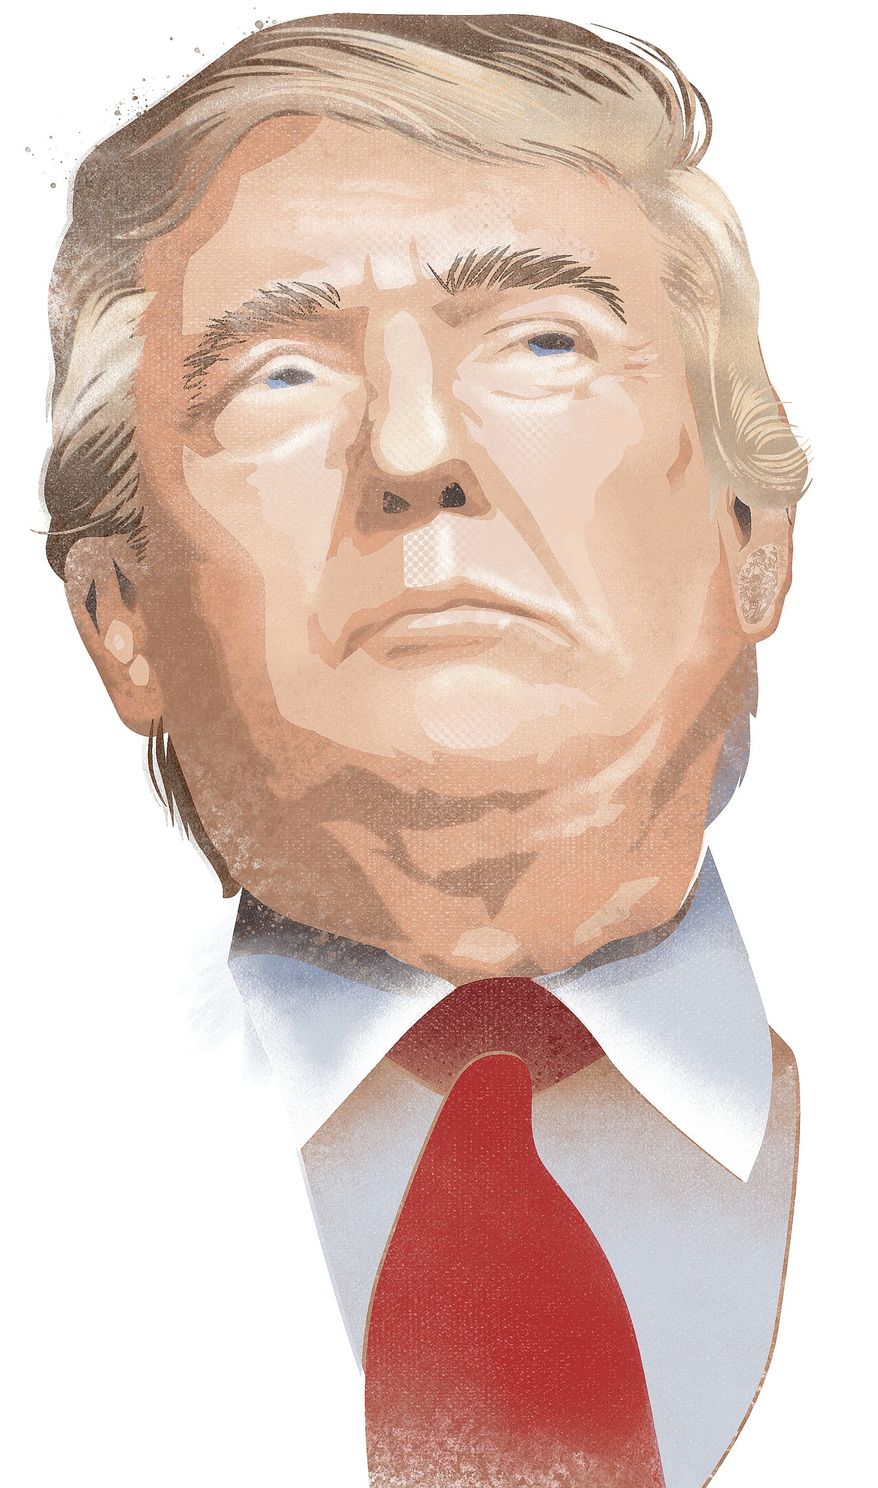 Donald Trump Illustration by Linas Garsys/The Washington Times